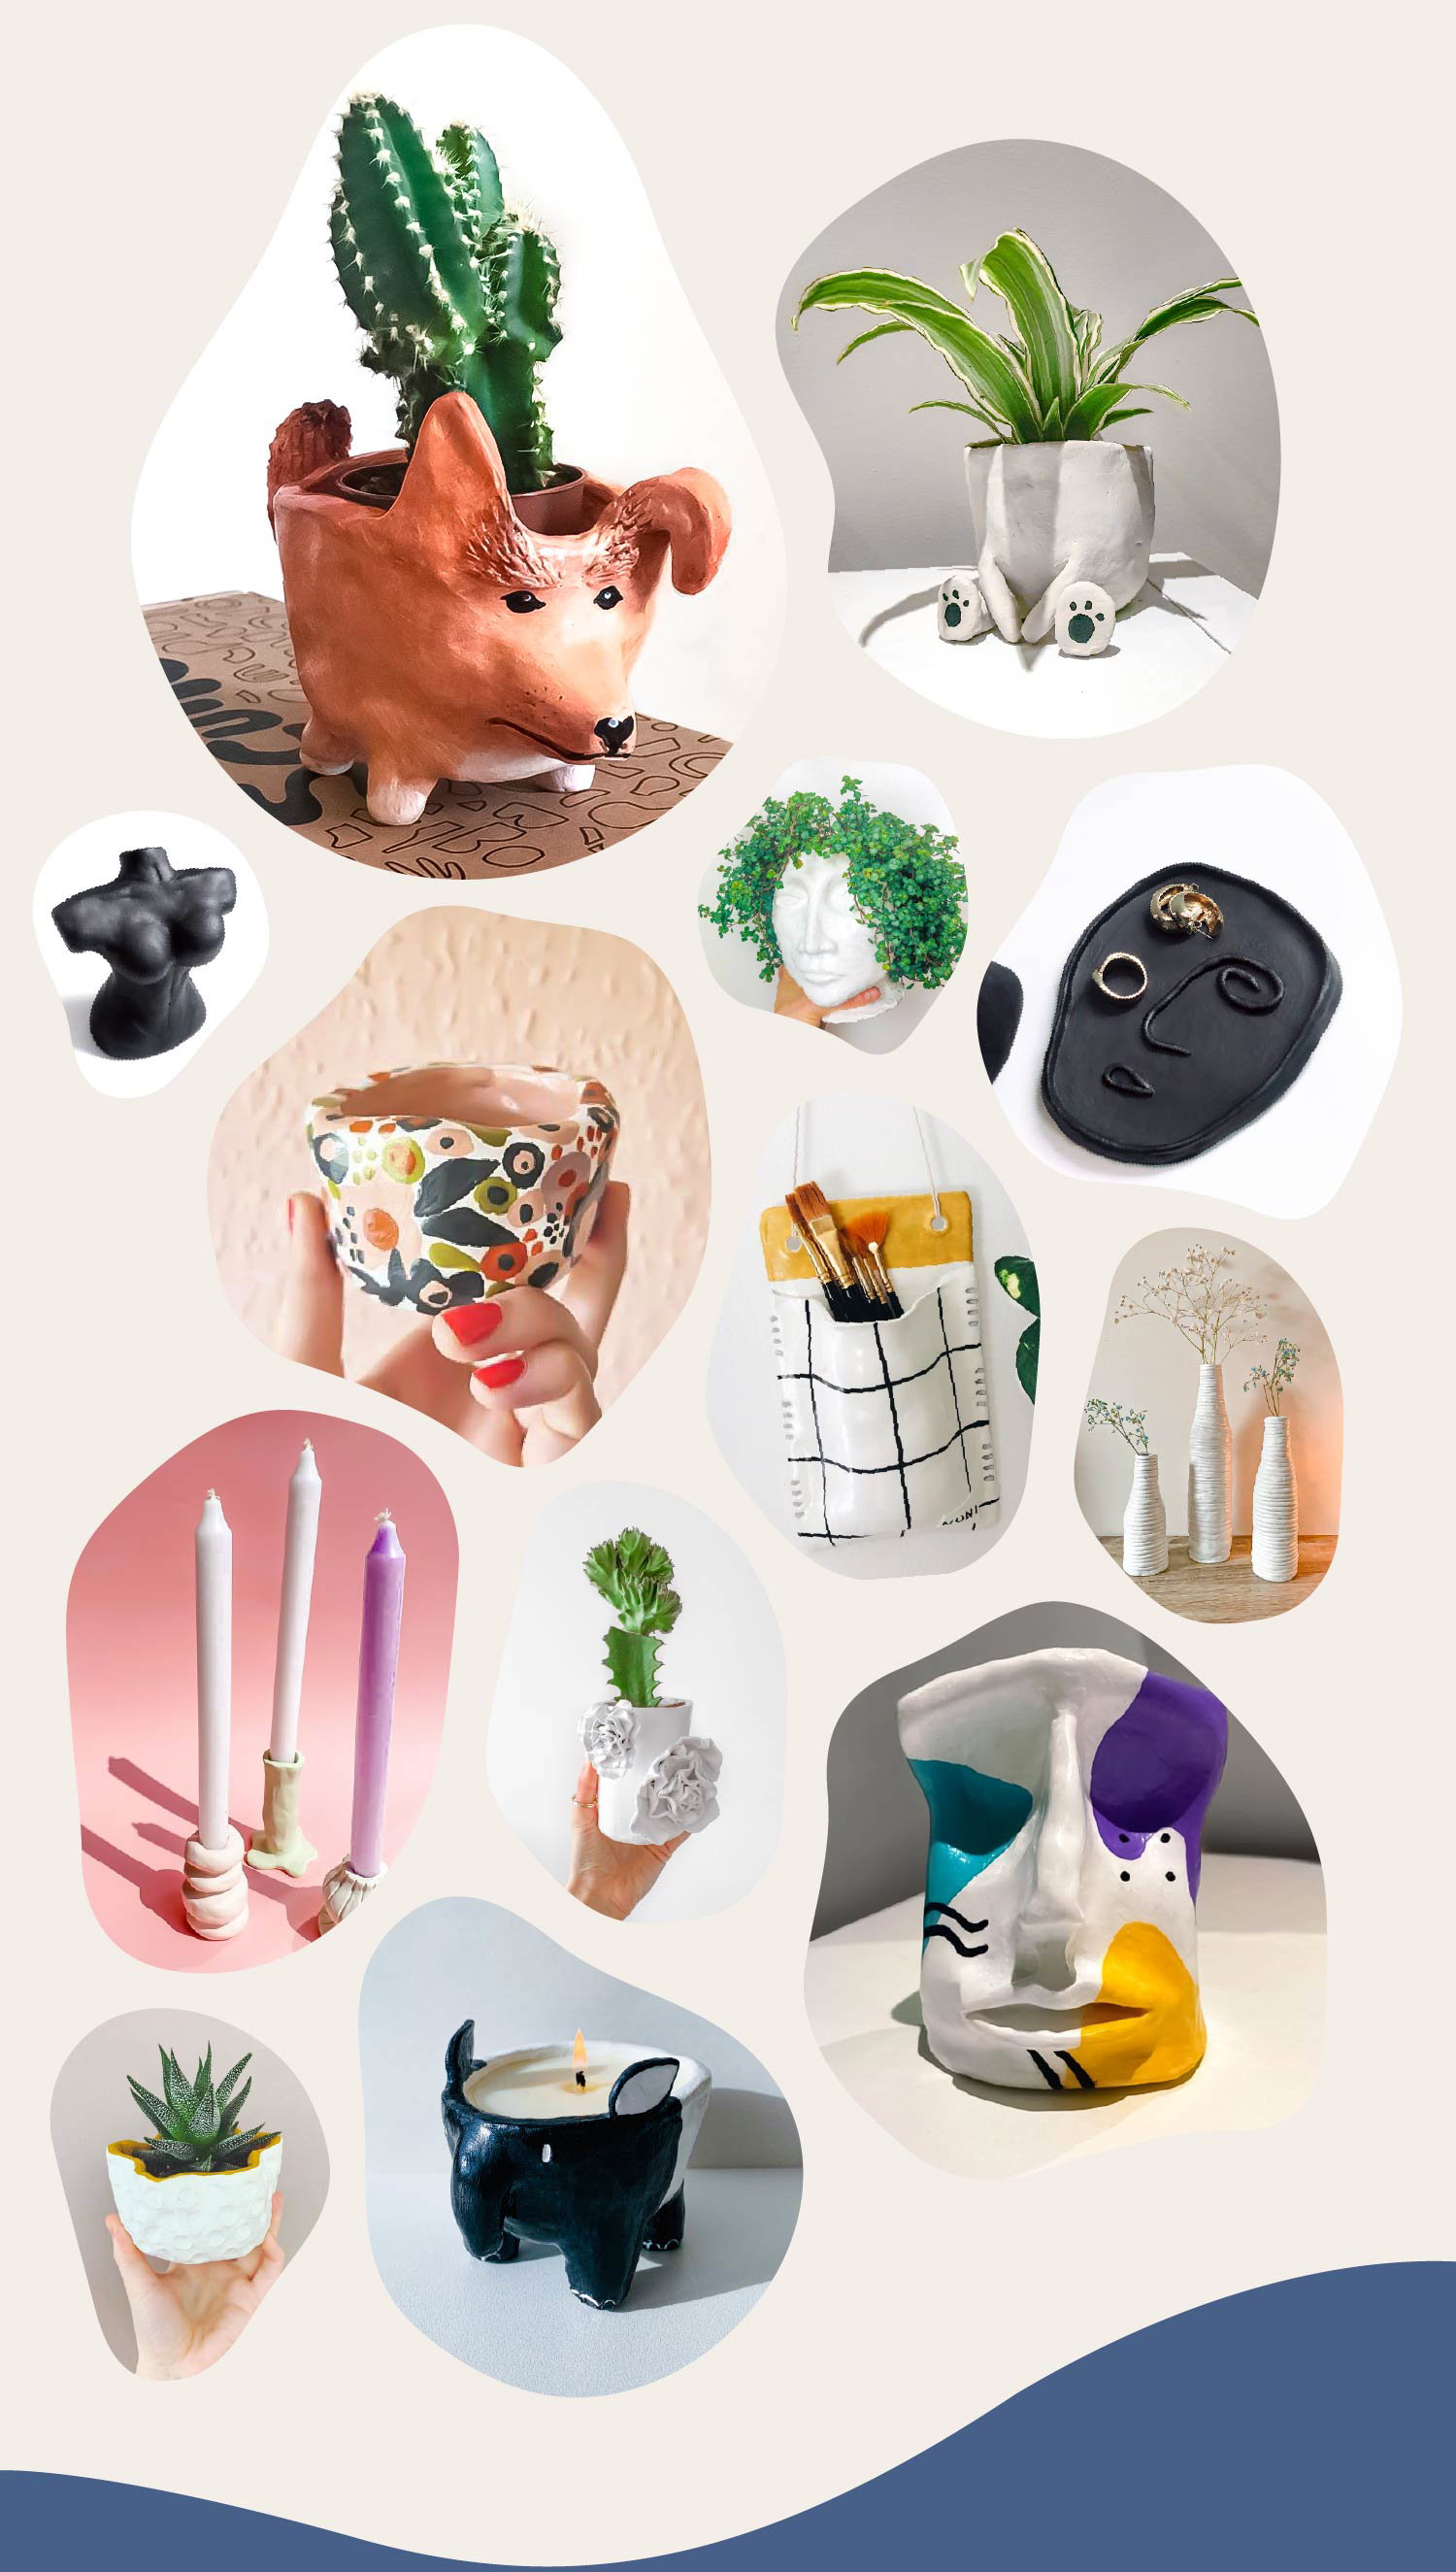 Sculpd Home Collection: Donut Vase Kit